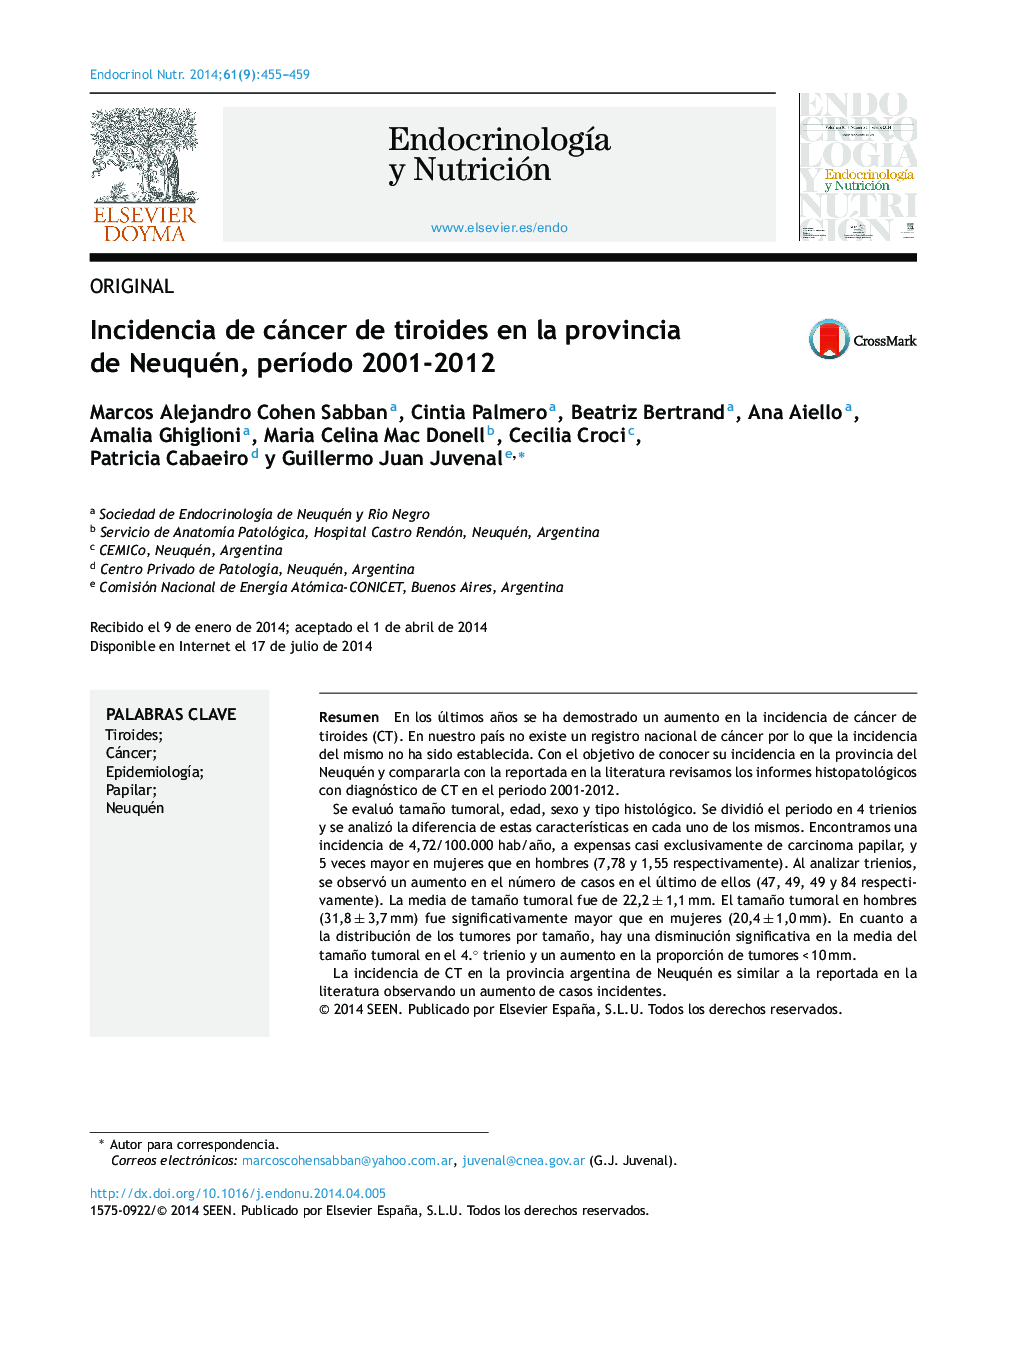 Incidencia de cáncer de tiroides en la provincia de Neuquén, período 2001-2012